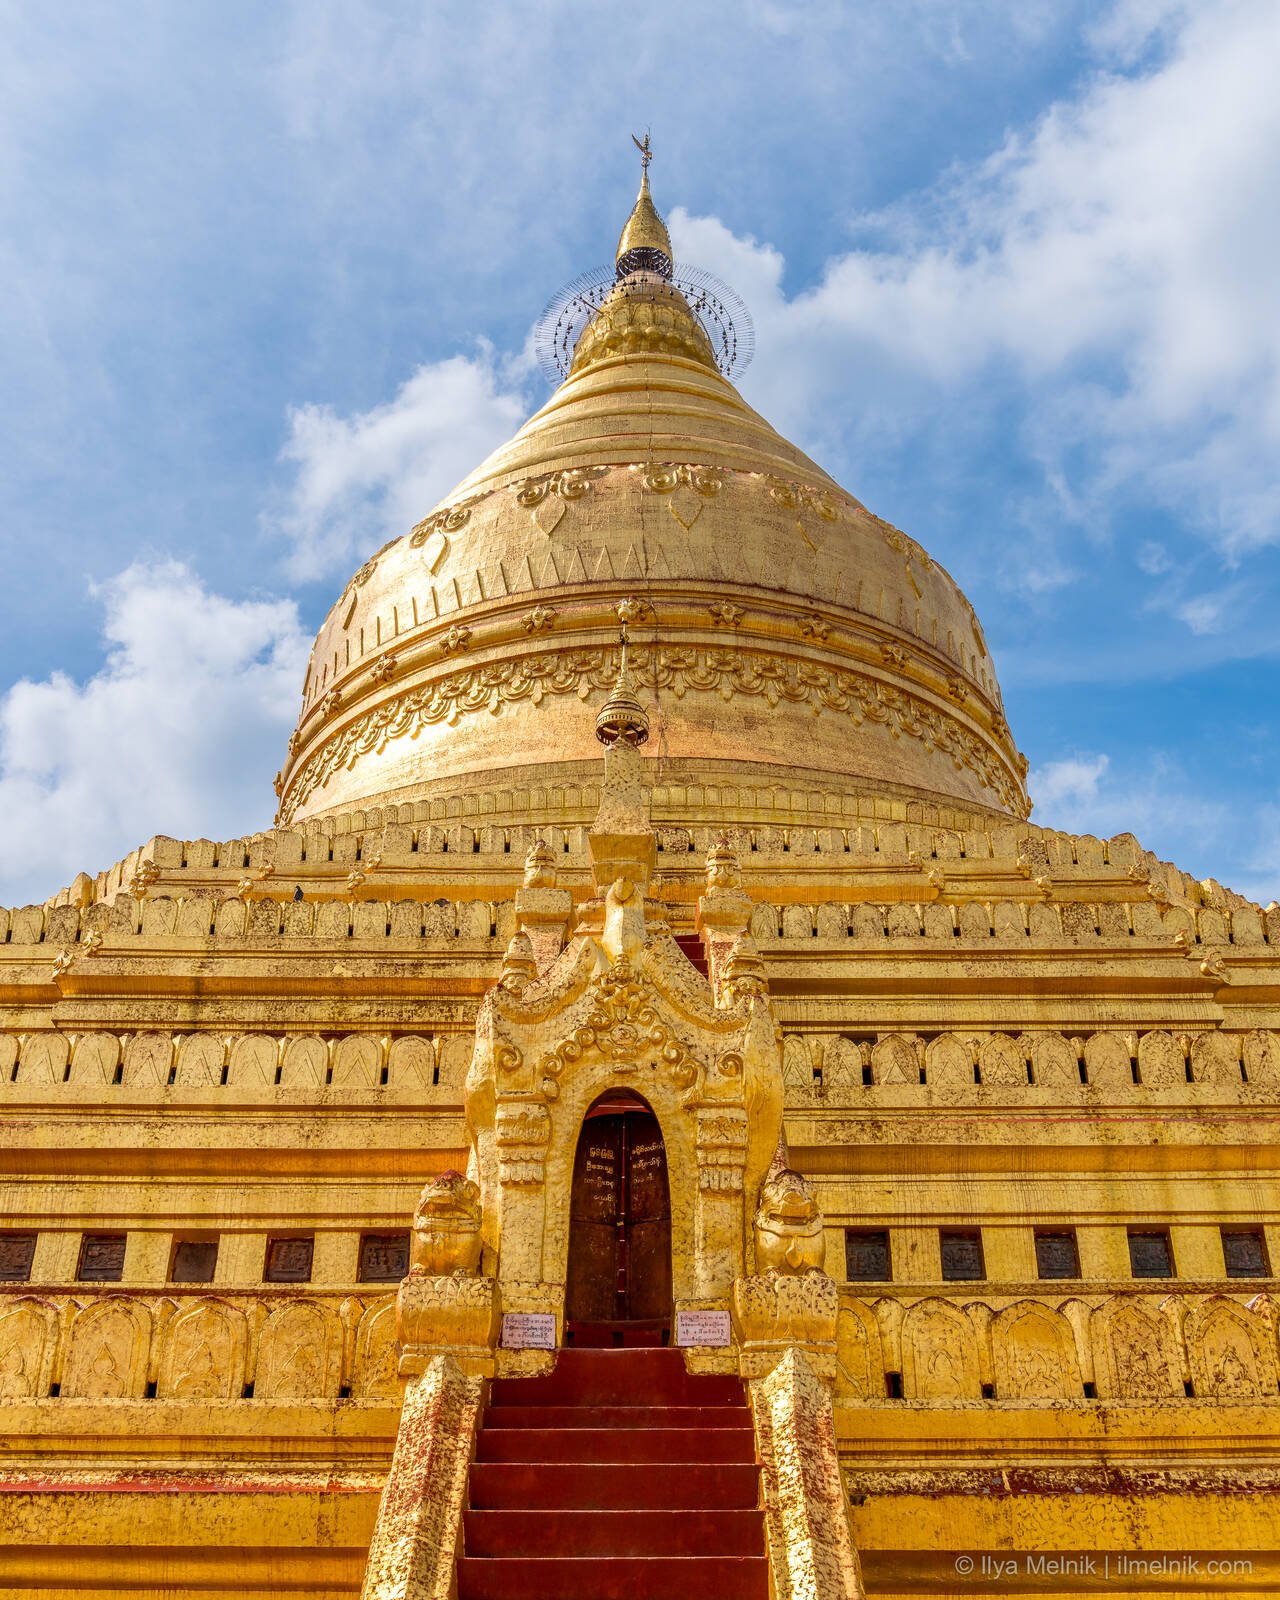 Image of Shwezigon Pagoda near Bagan by Ilya Melnik